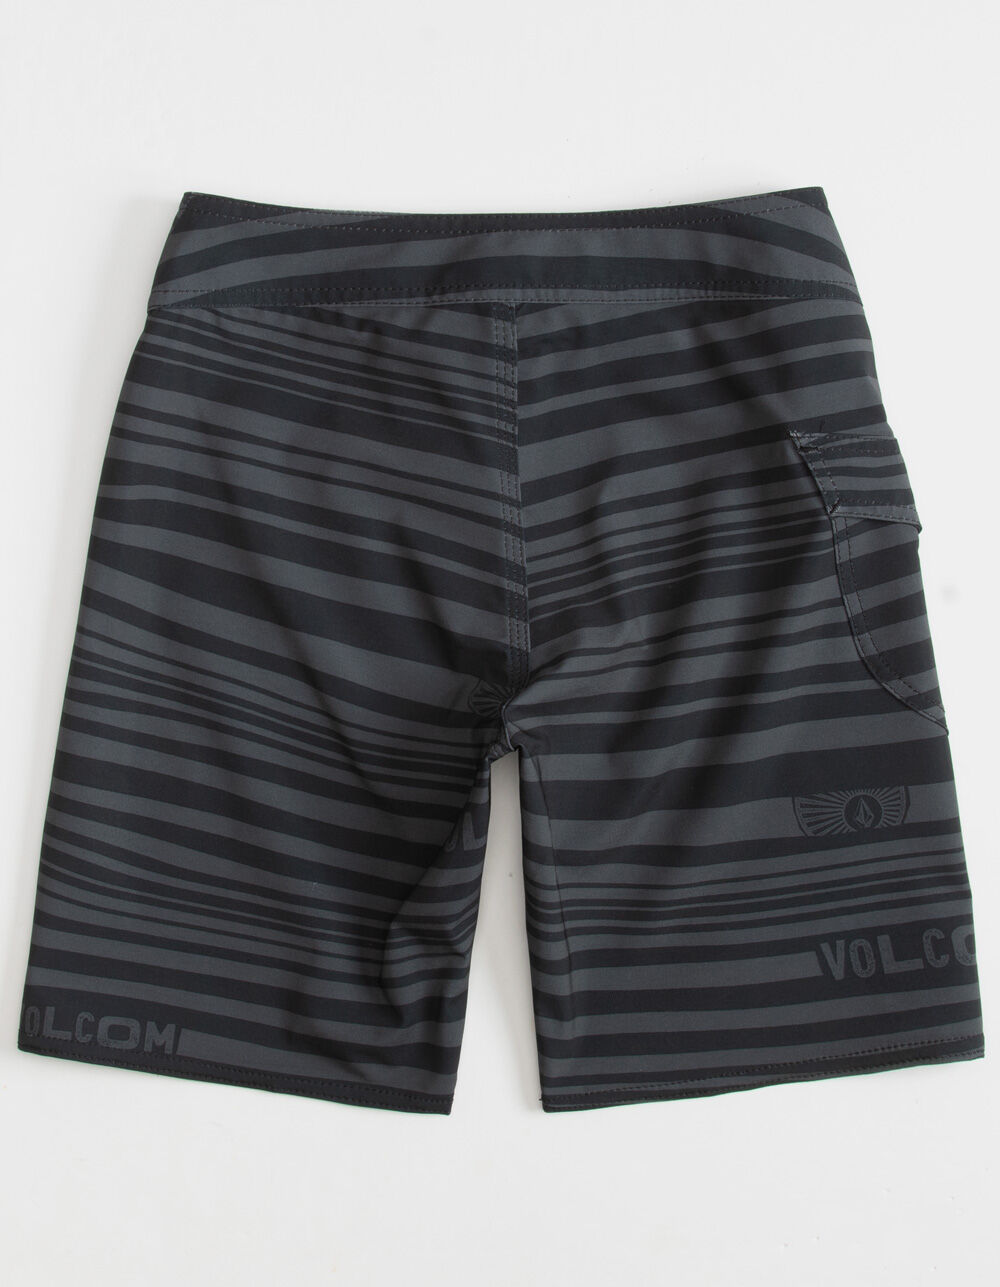 VOLCOM Stripe Mod Boys Boardshorts - BLACK | Tillys